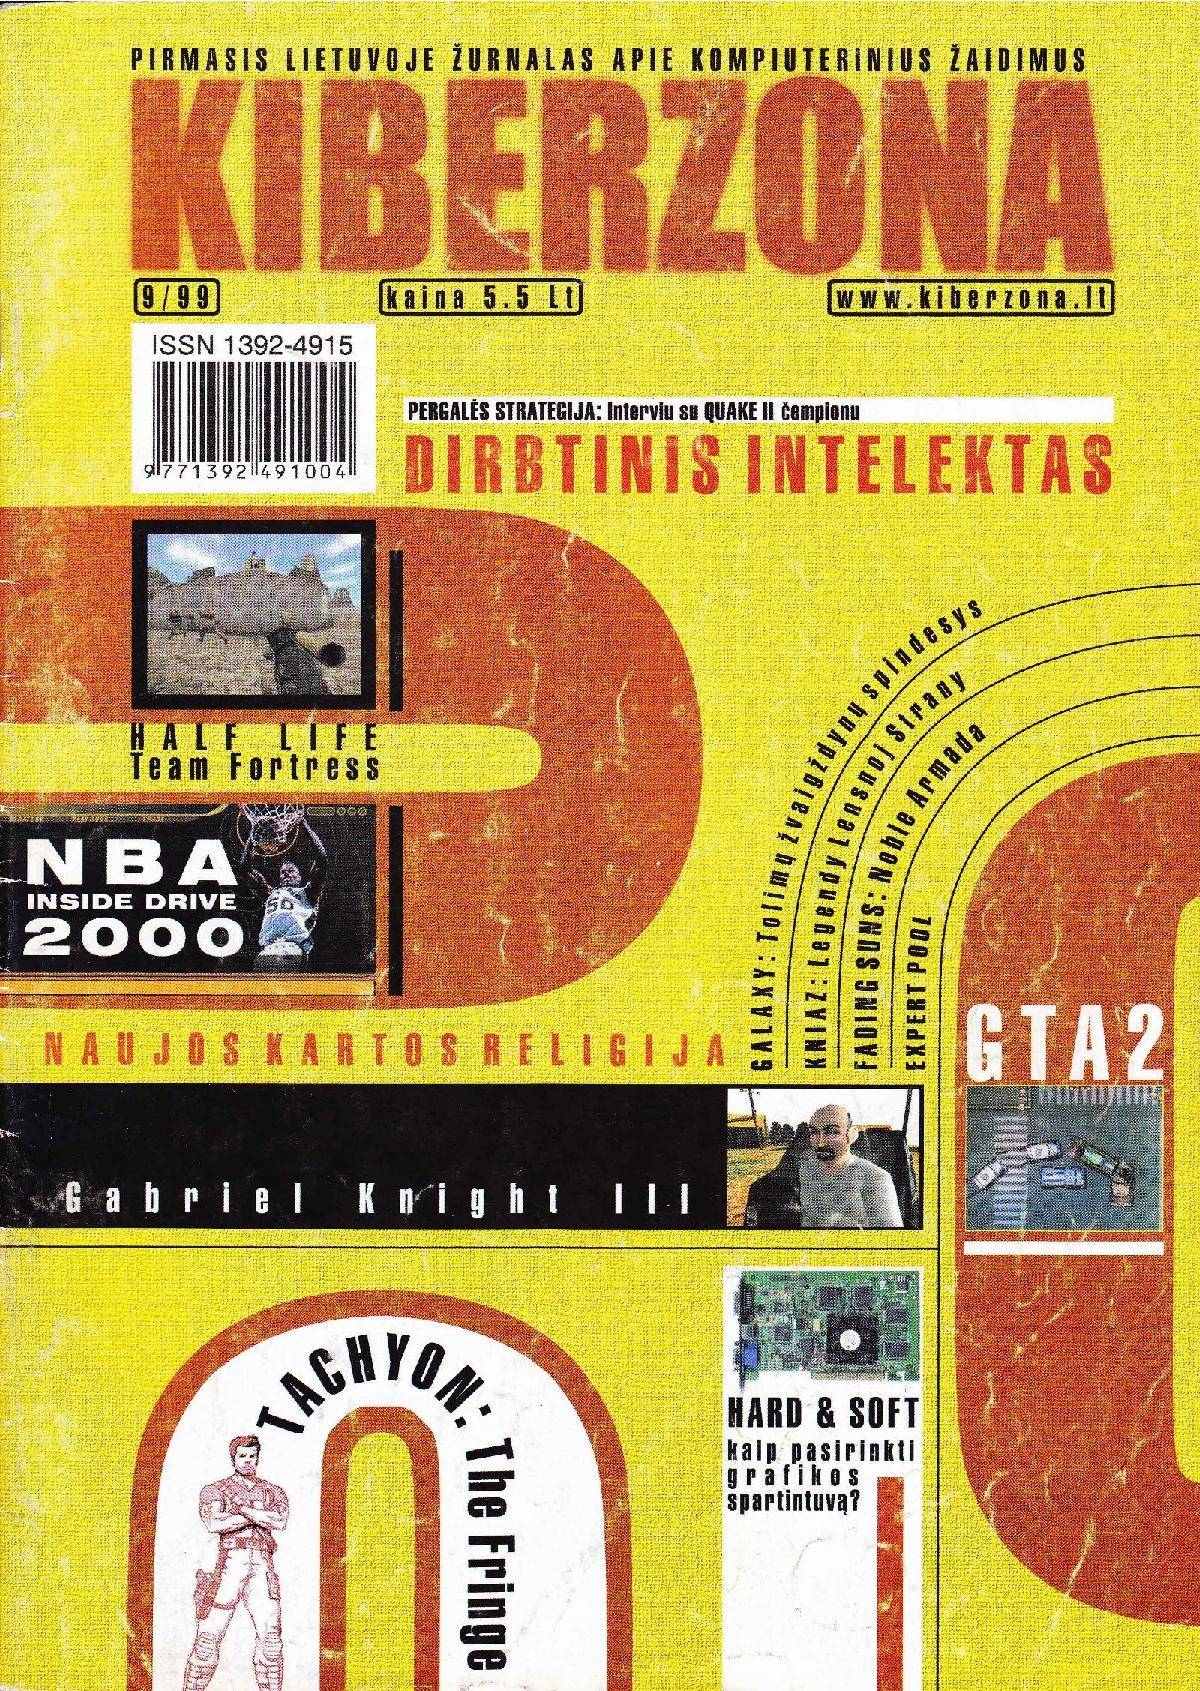 Kiberzona 1999 09.pdf